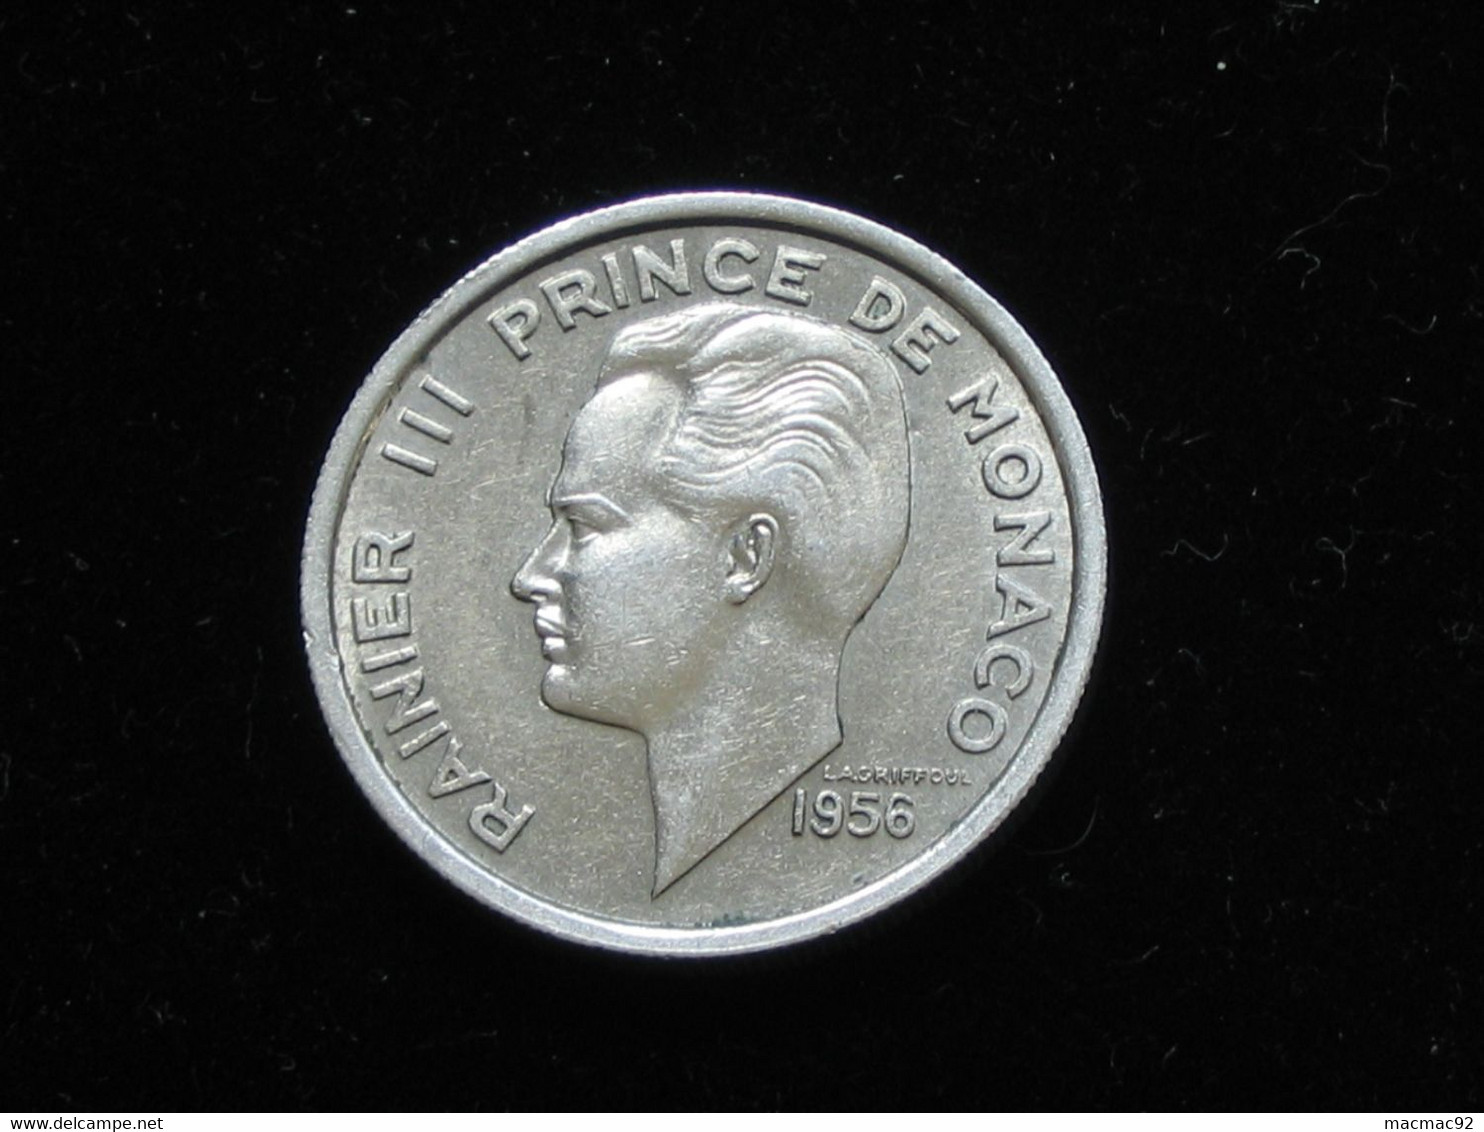 MONACO - 100 Frs 1956 - Rainier III Prince De Monaco **** EN ACHAT IMMEDIAT **** - 1949-1956 Old Francs